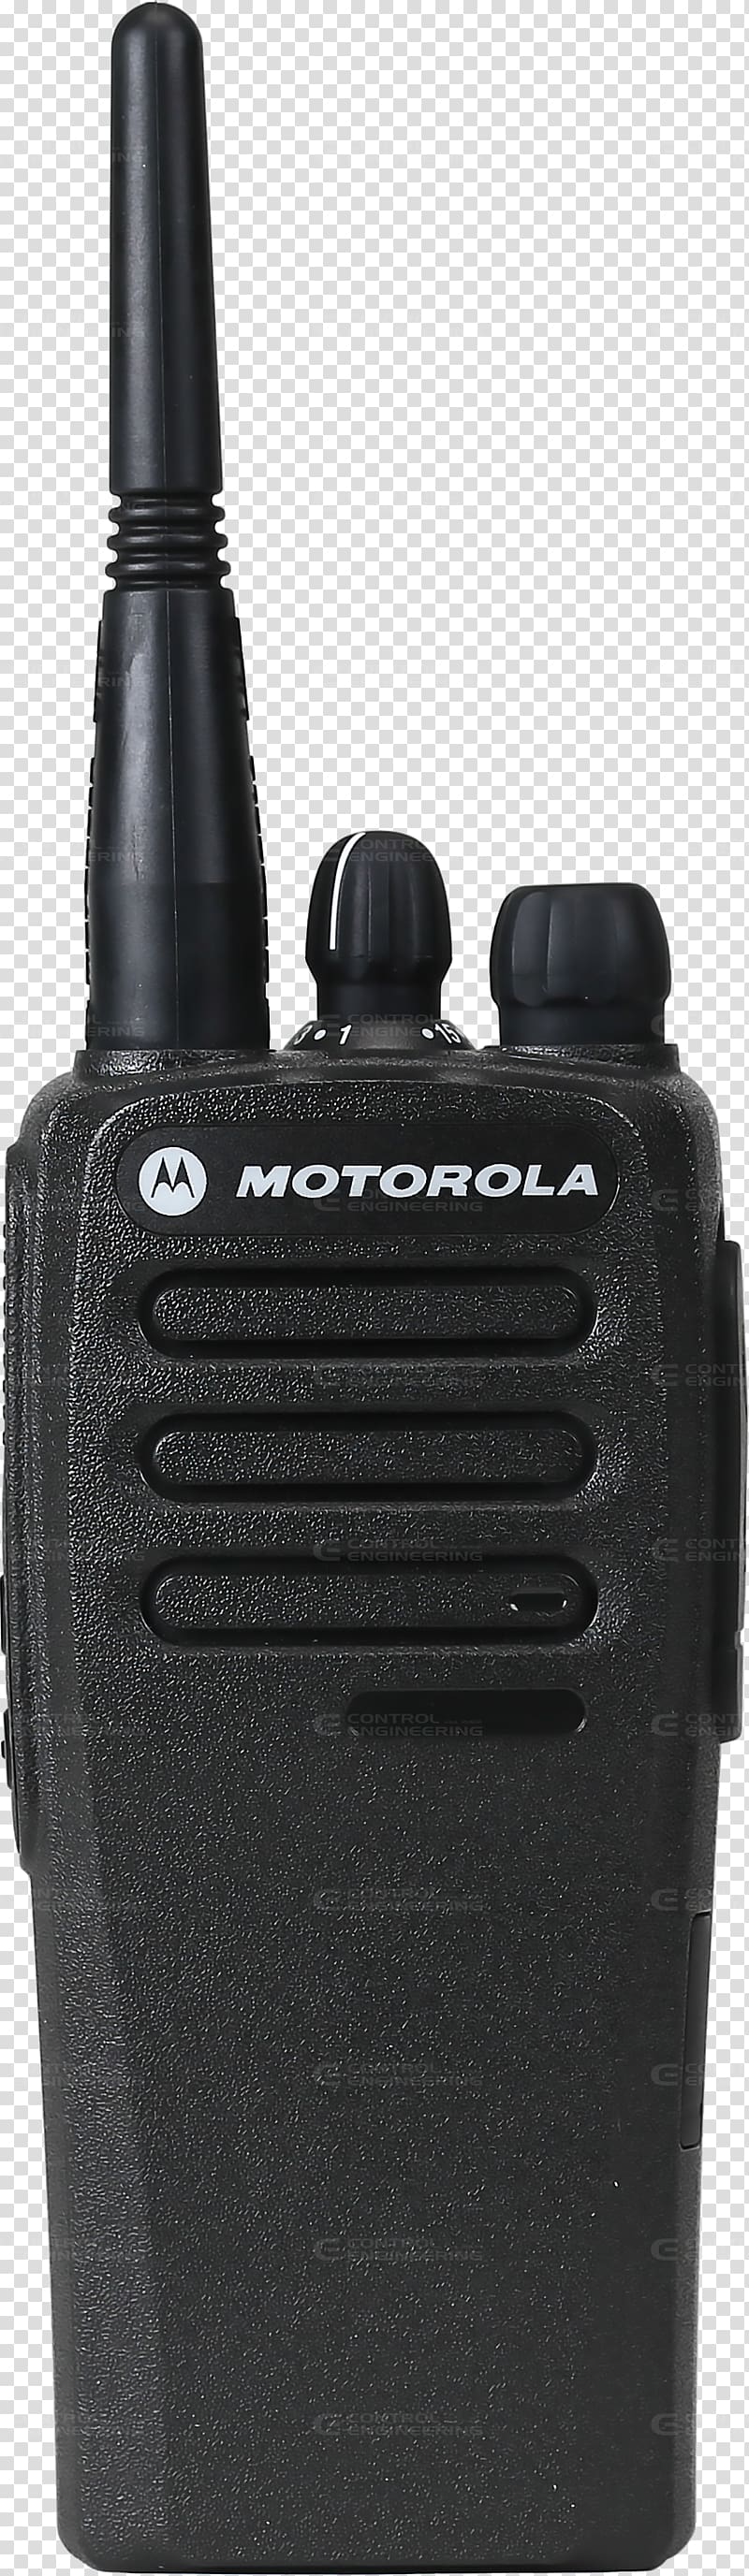 Two-way radio Motorola Solutions Motorola CP200D Walkie-talkie, radio transparent background PNG clipart